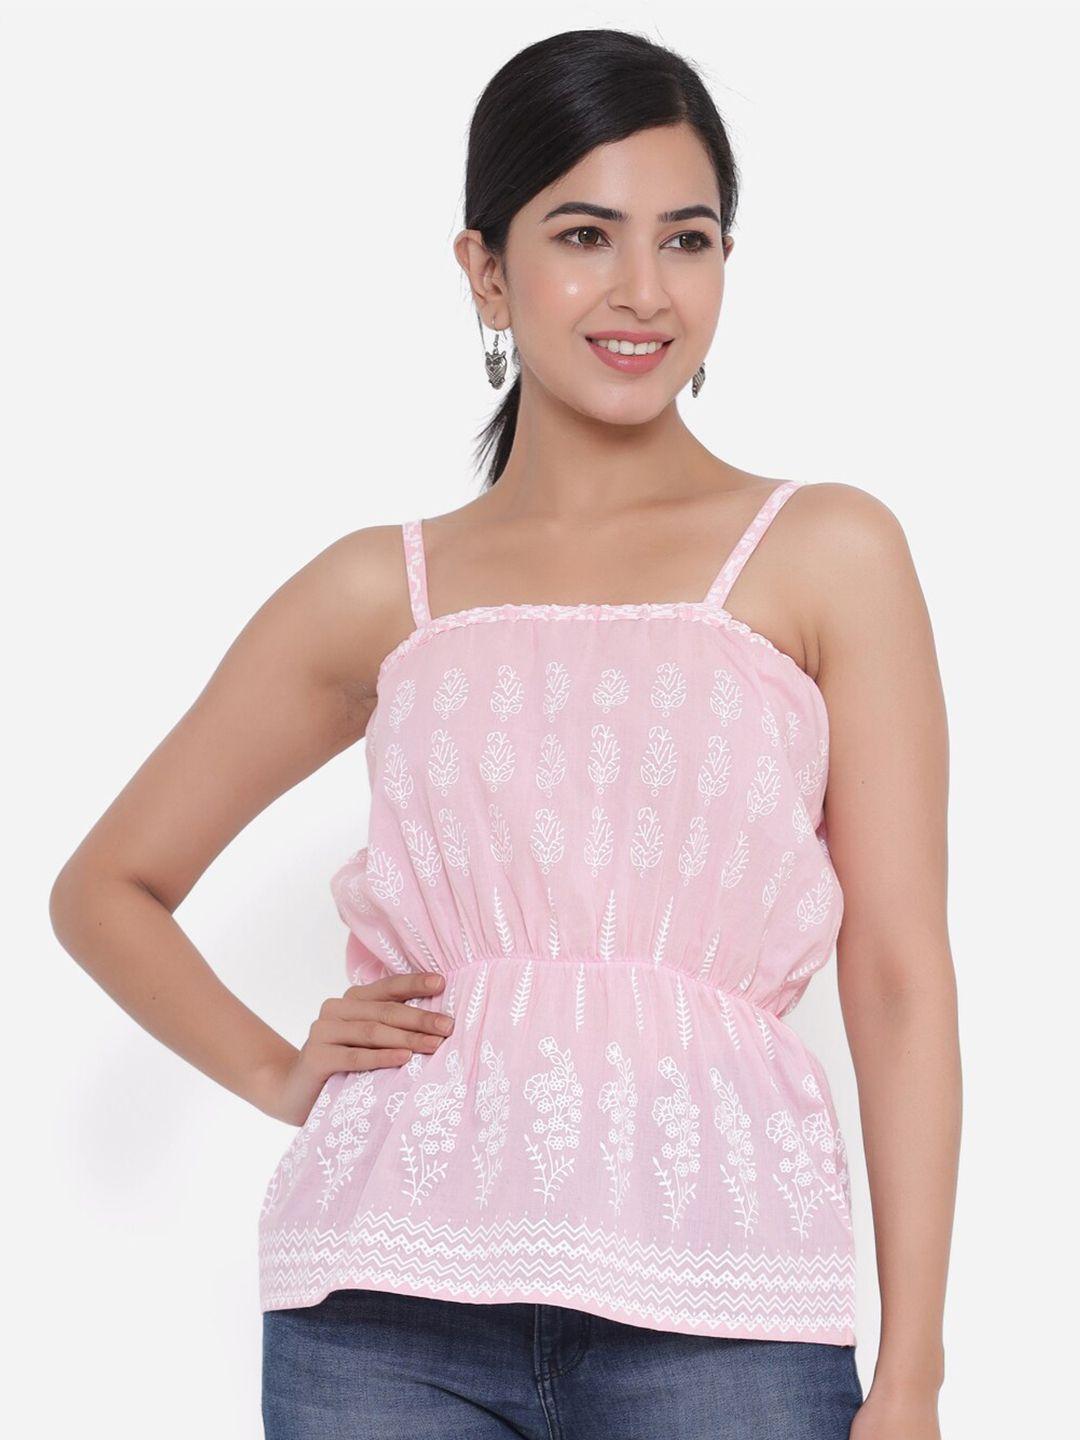 christeena-women-pink-floral-print-cinched-waist-top